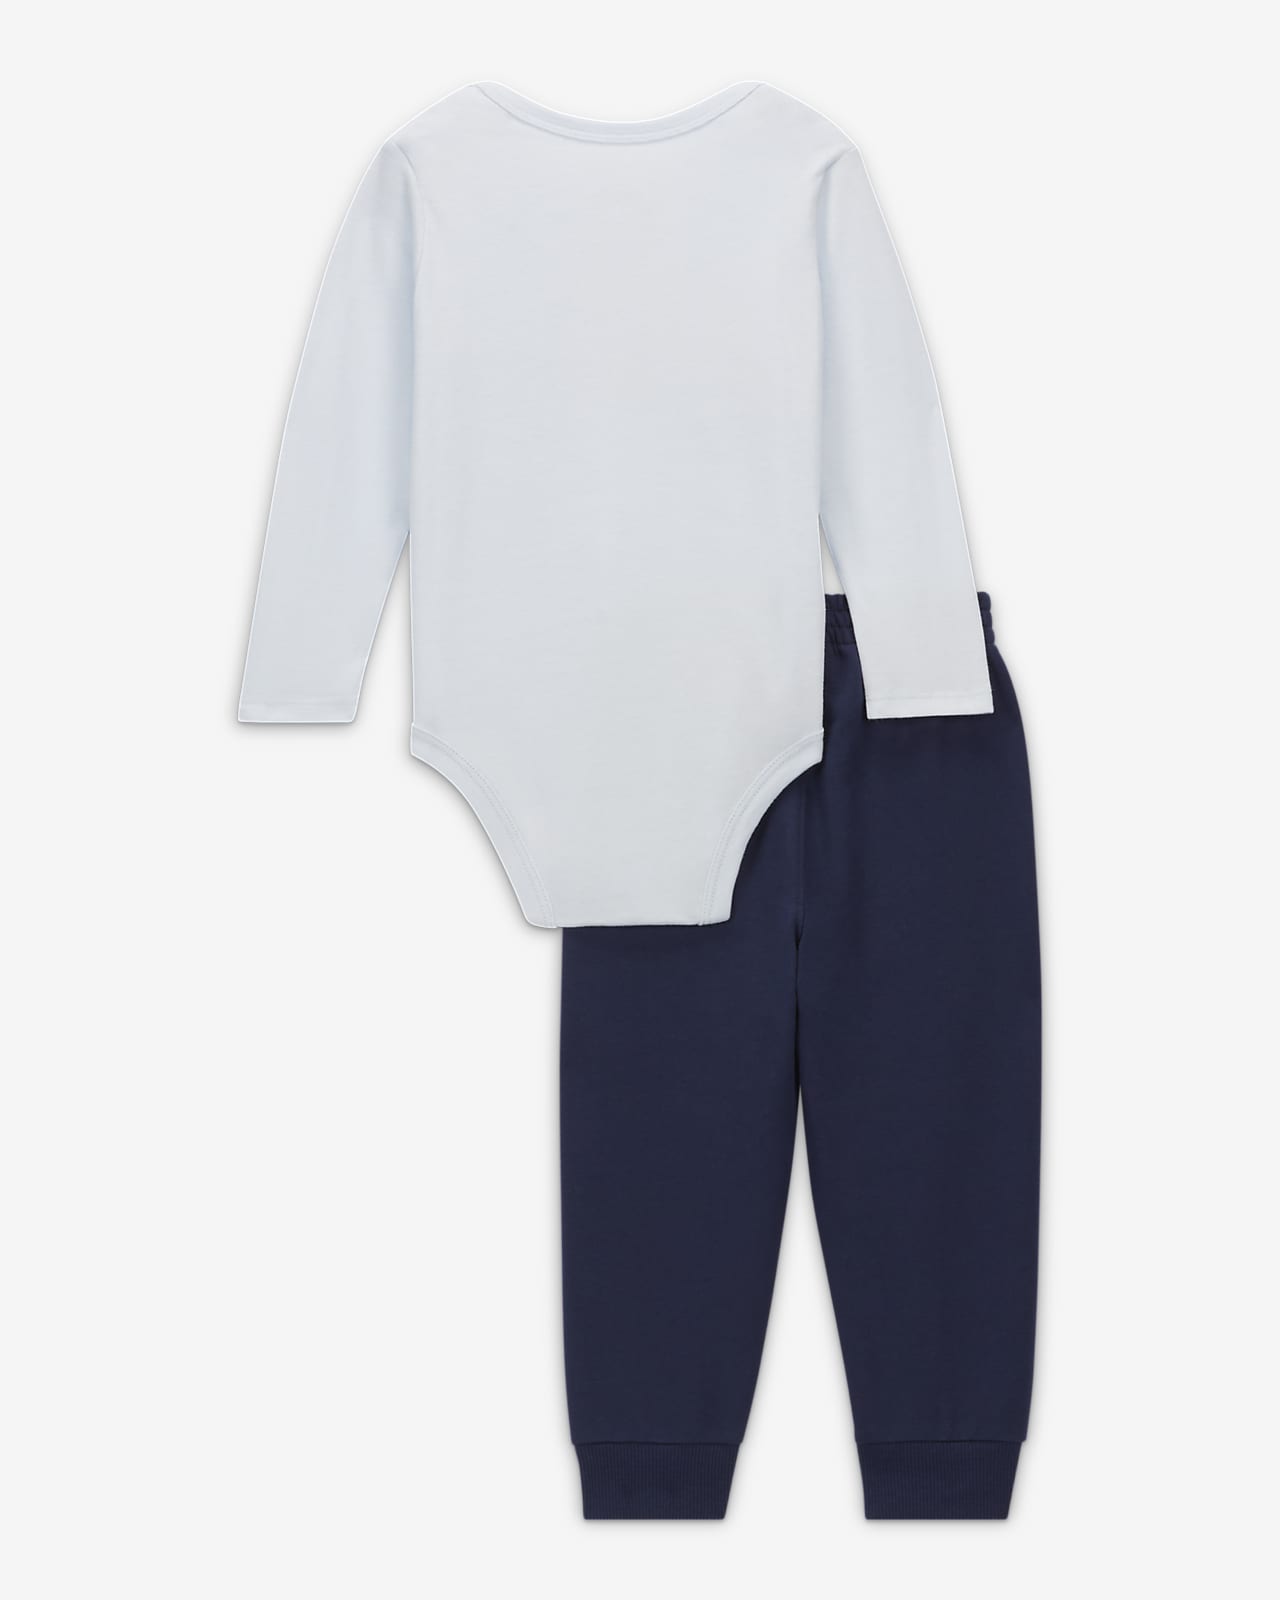 Nike Sportswear Icon Bodysuit and Pants Set Baby 2-Piece Set.